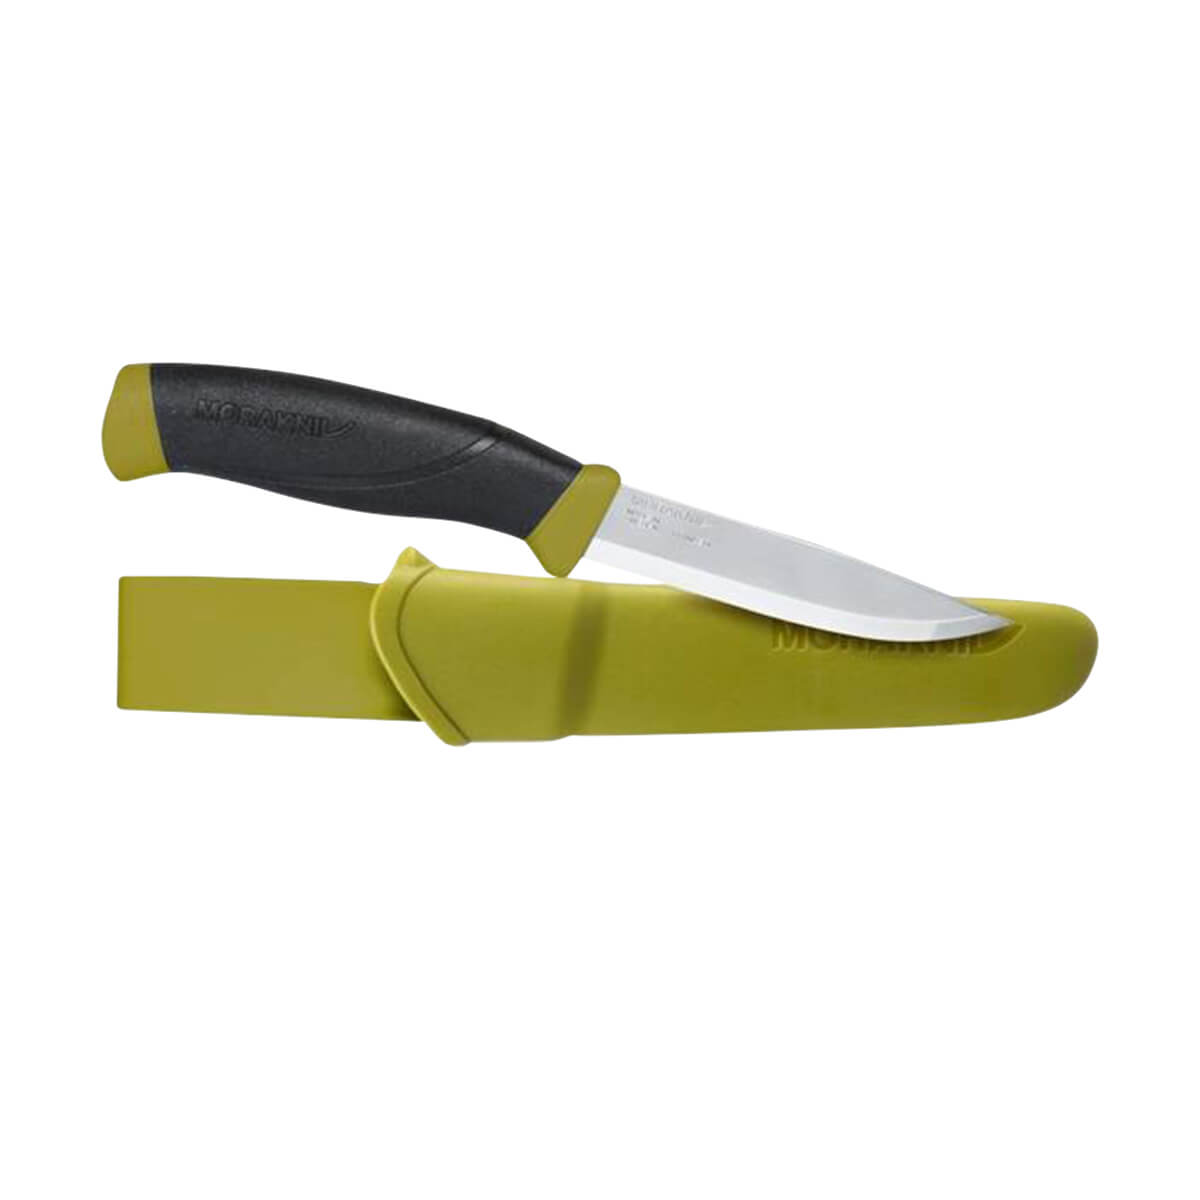 Mora Companion Knife - Olvie Green